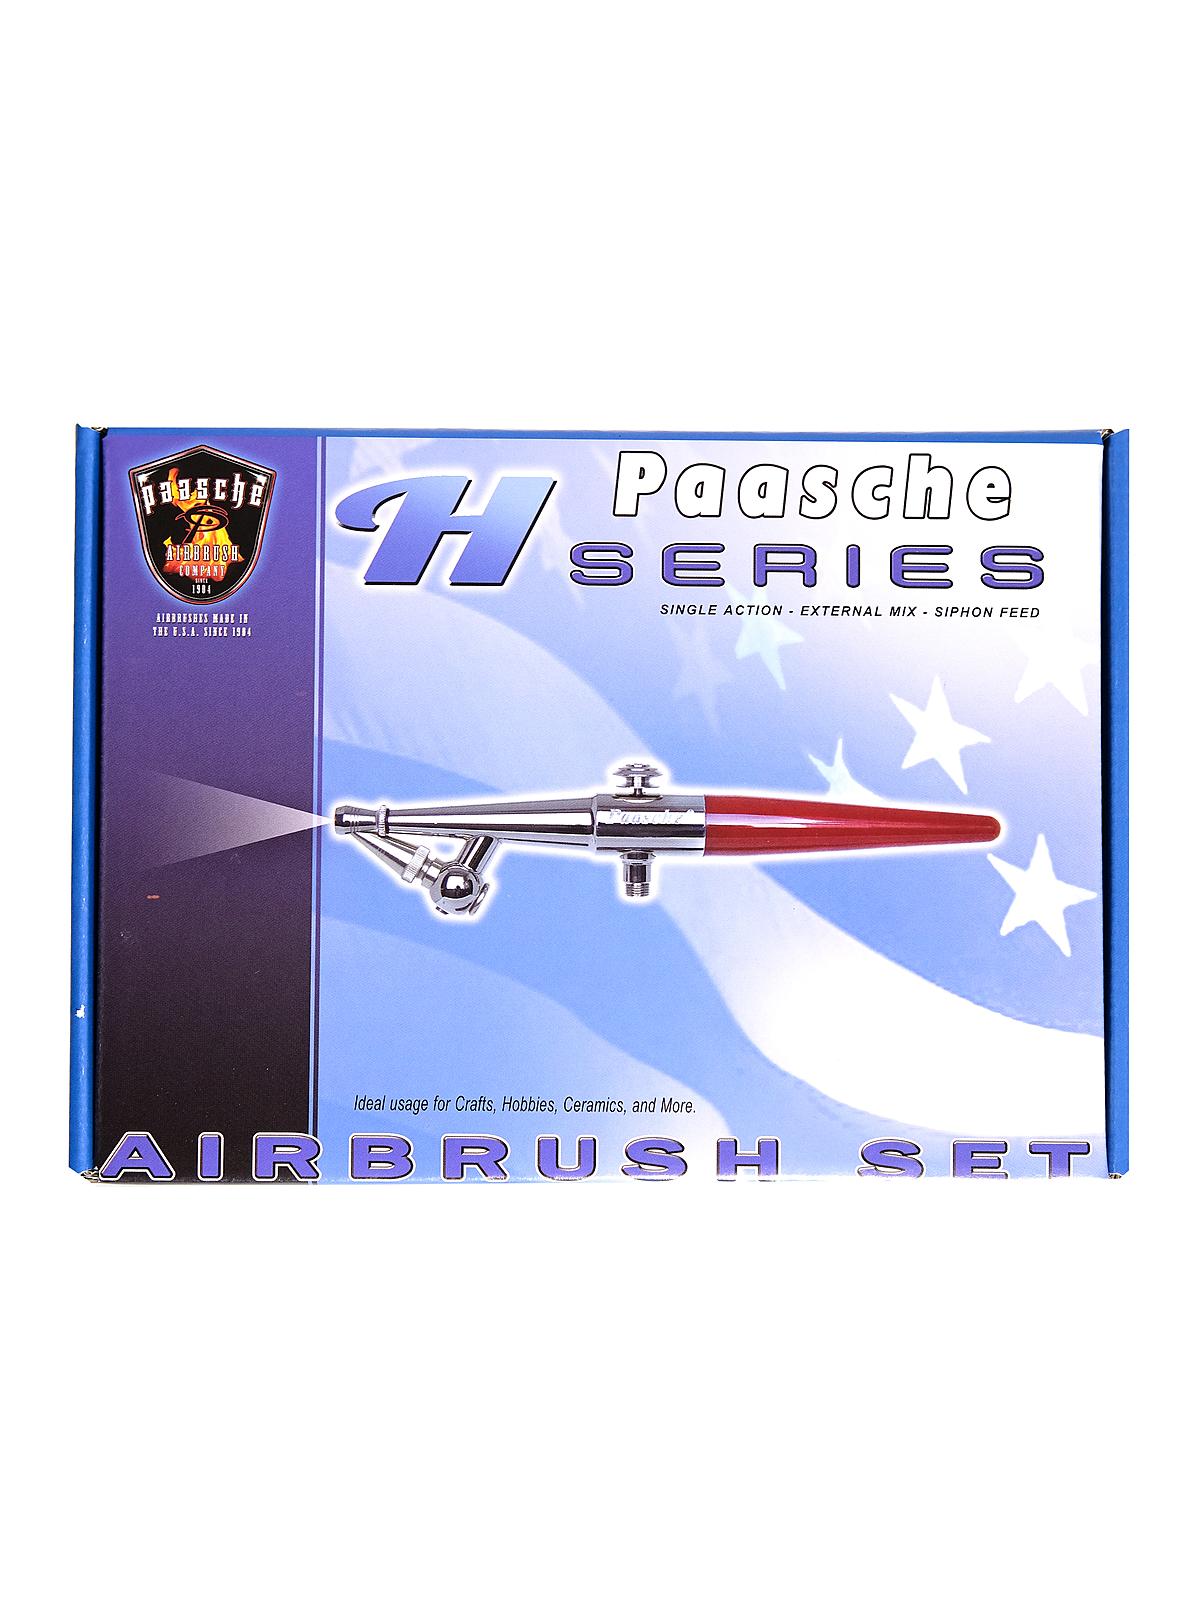 Paasche Model H (Hobby) Airbrush Set